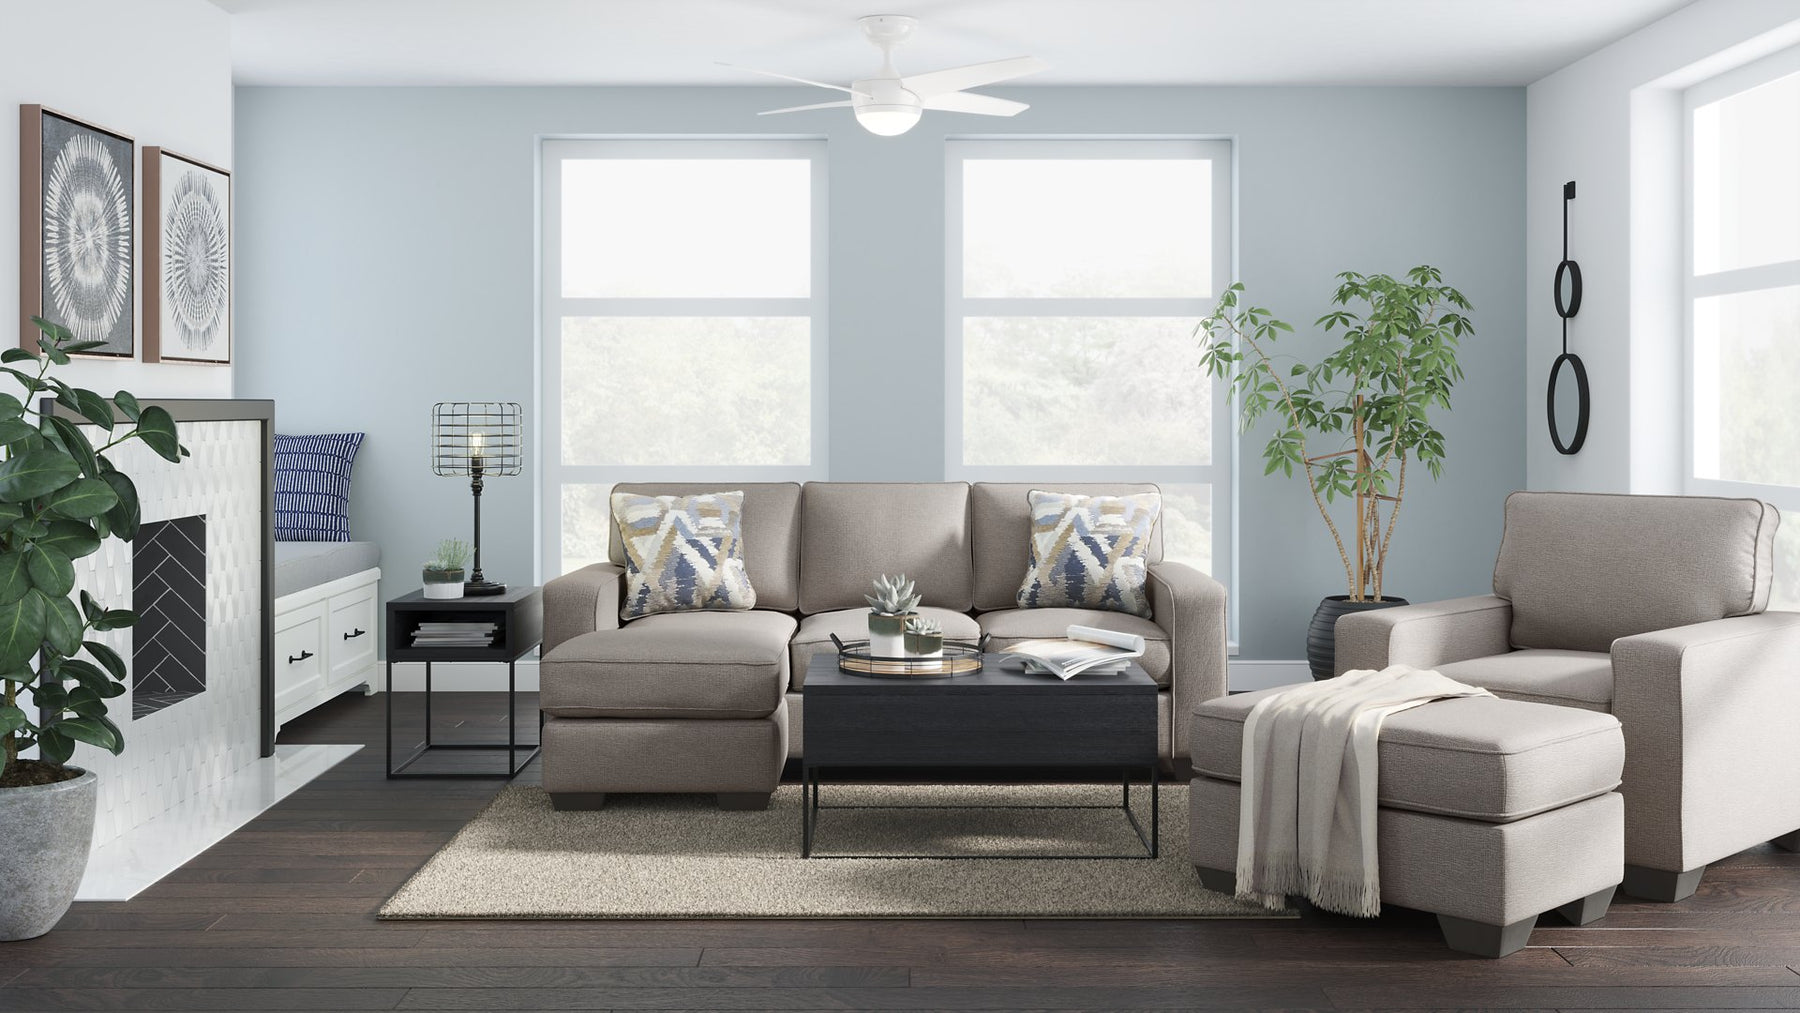 Greaves Living Room Set - Half Price Furniture